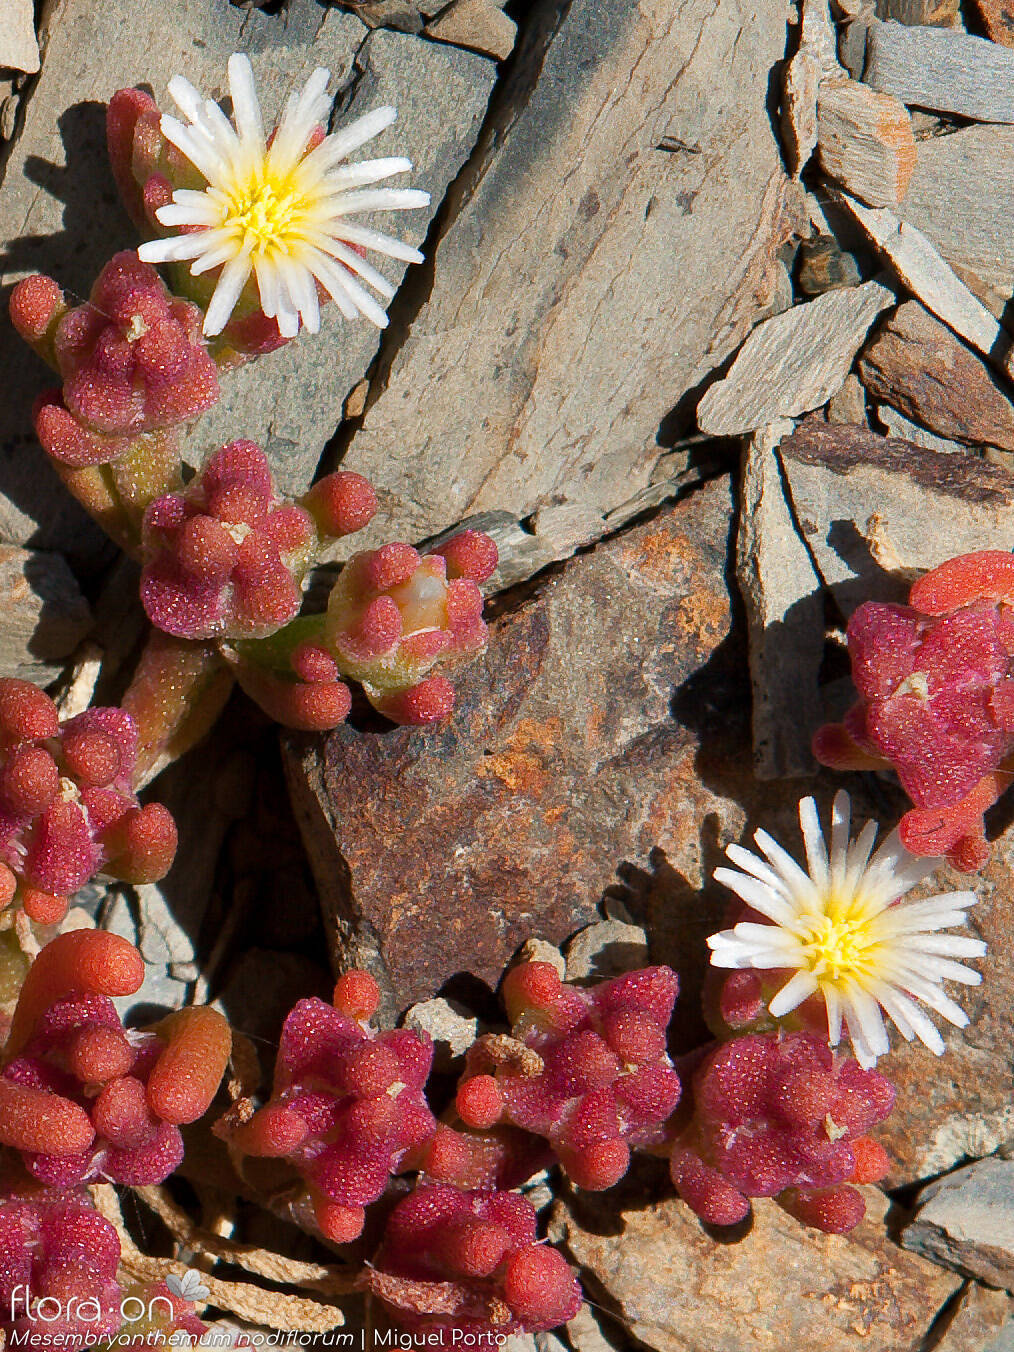 Mesembryanthemum nodiflorum - Flor (geral) | Miguel Porto; CC BY-NC 4.0